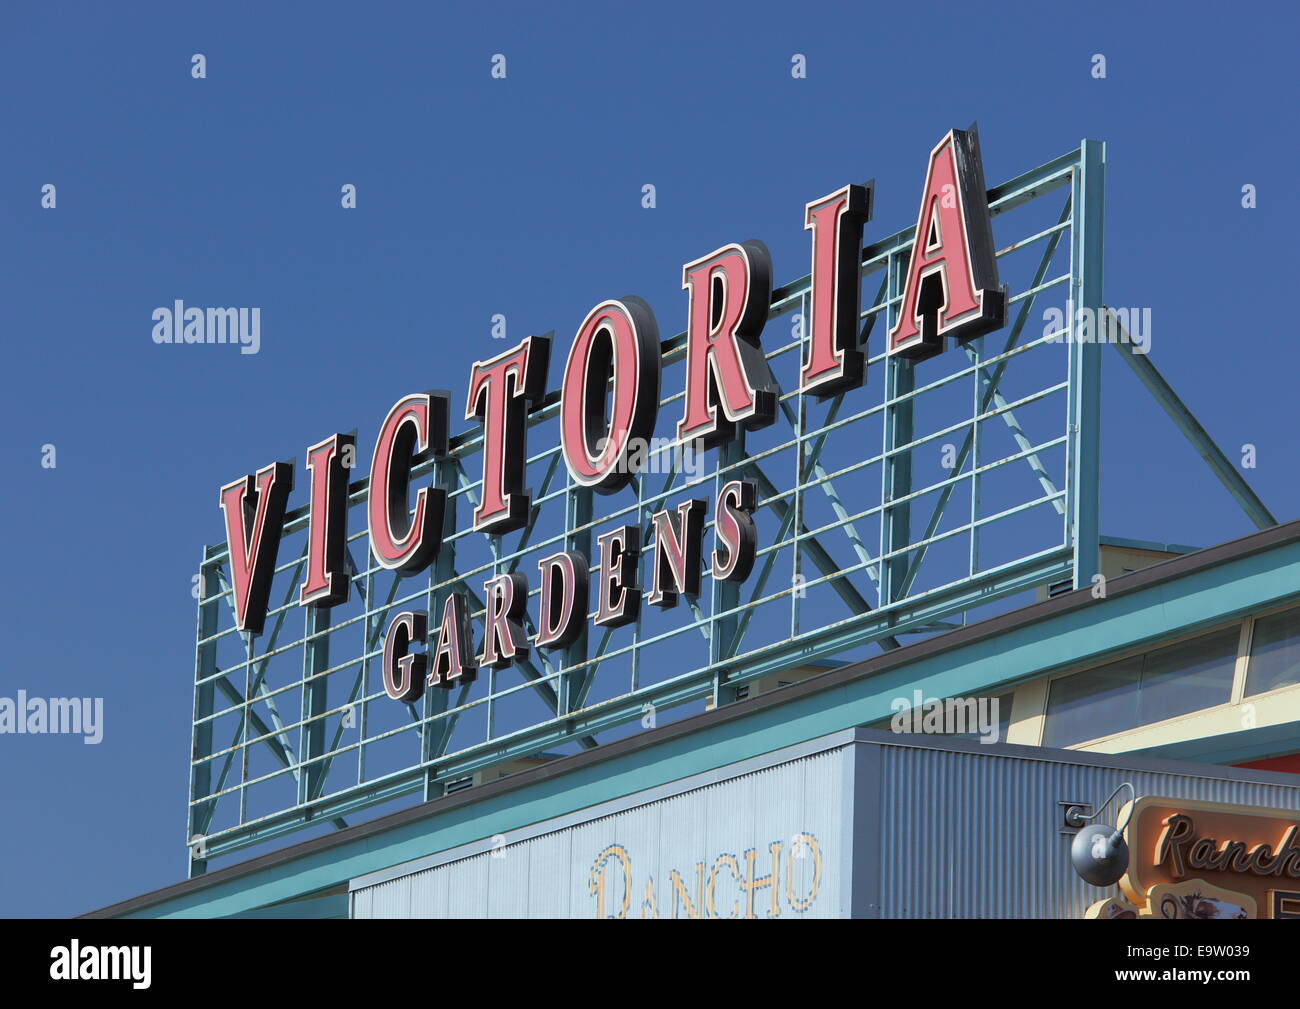 Victoria Gardens - VCC USA